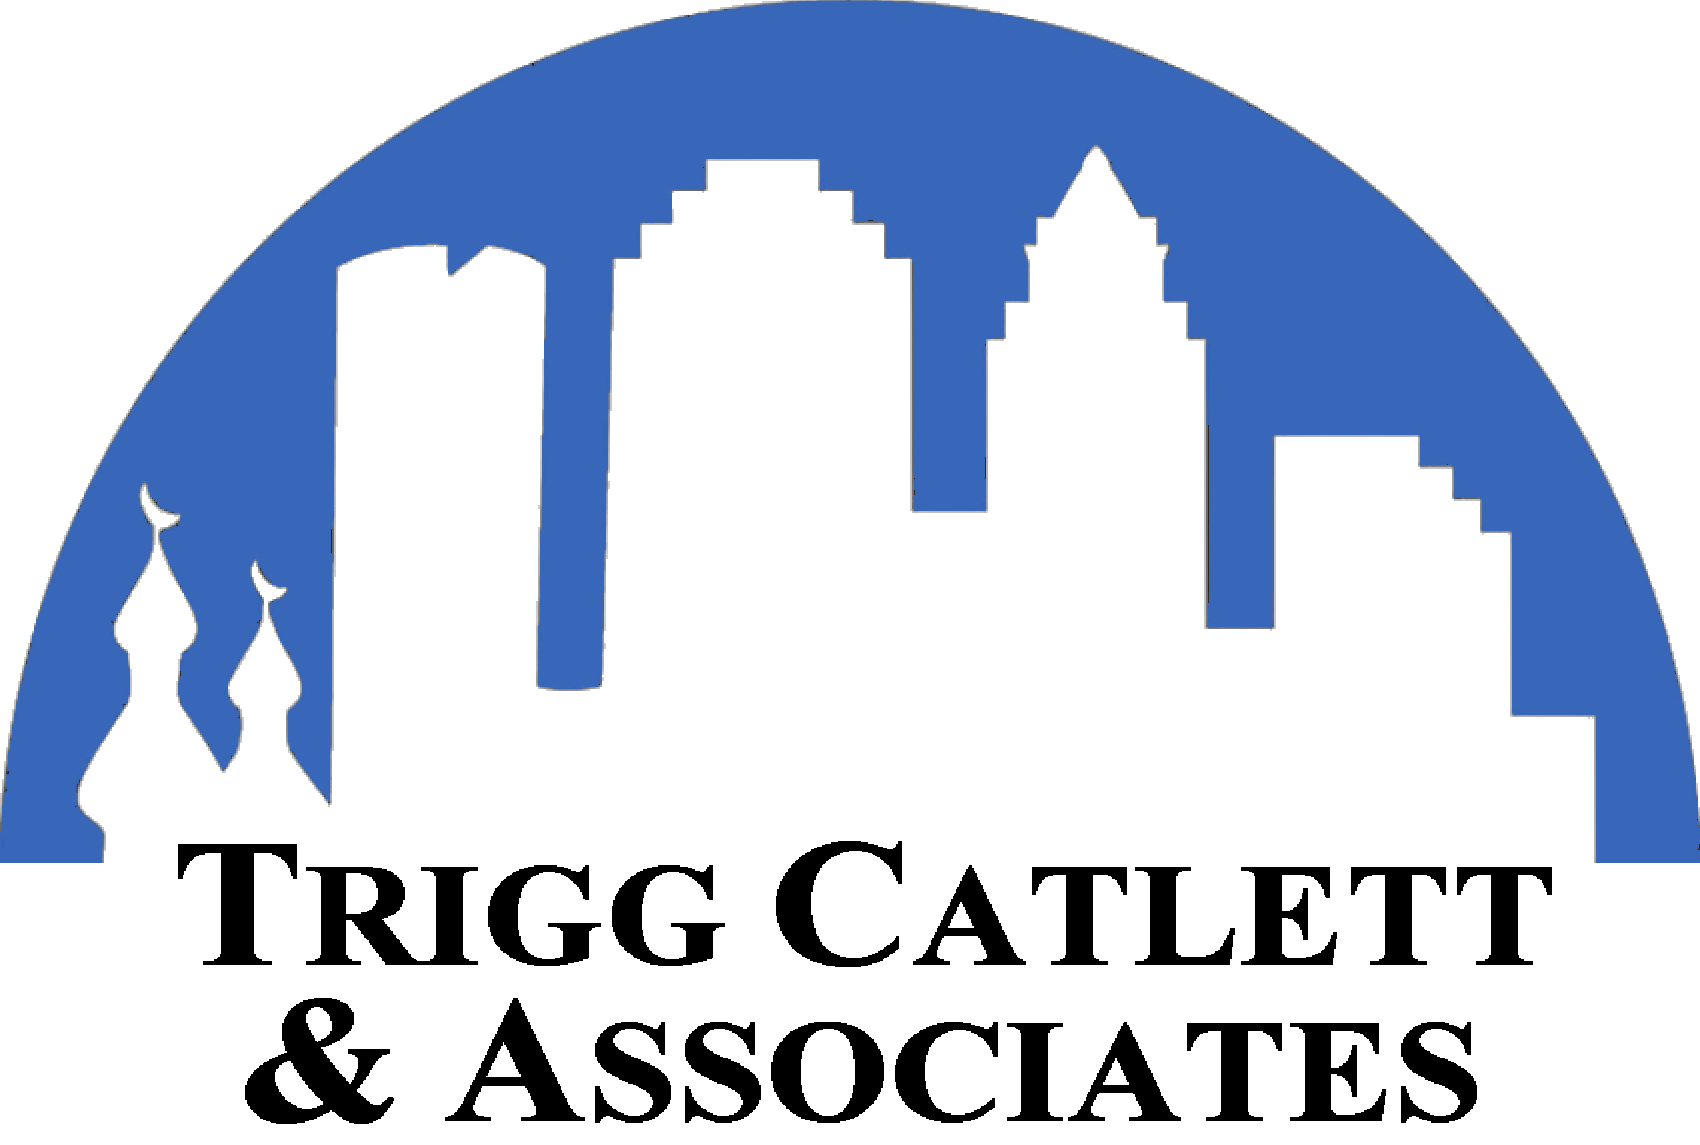 Trigg, Catlett & Associates